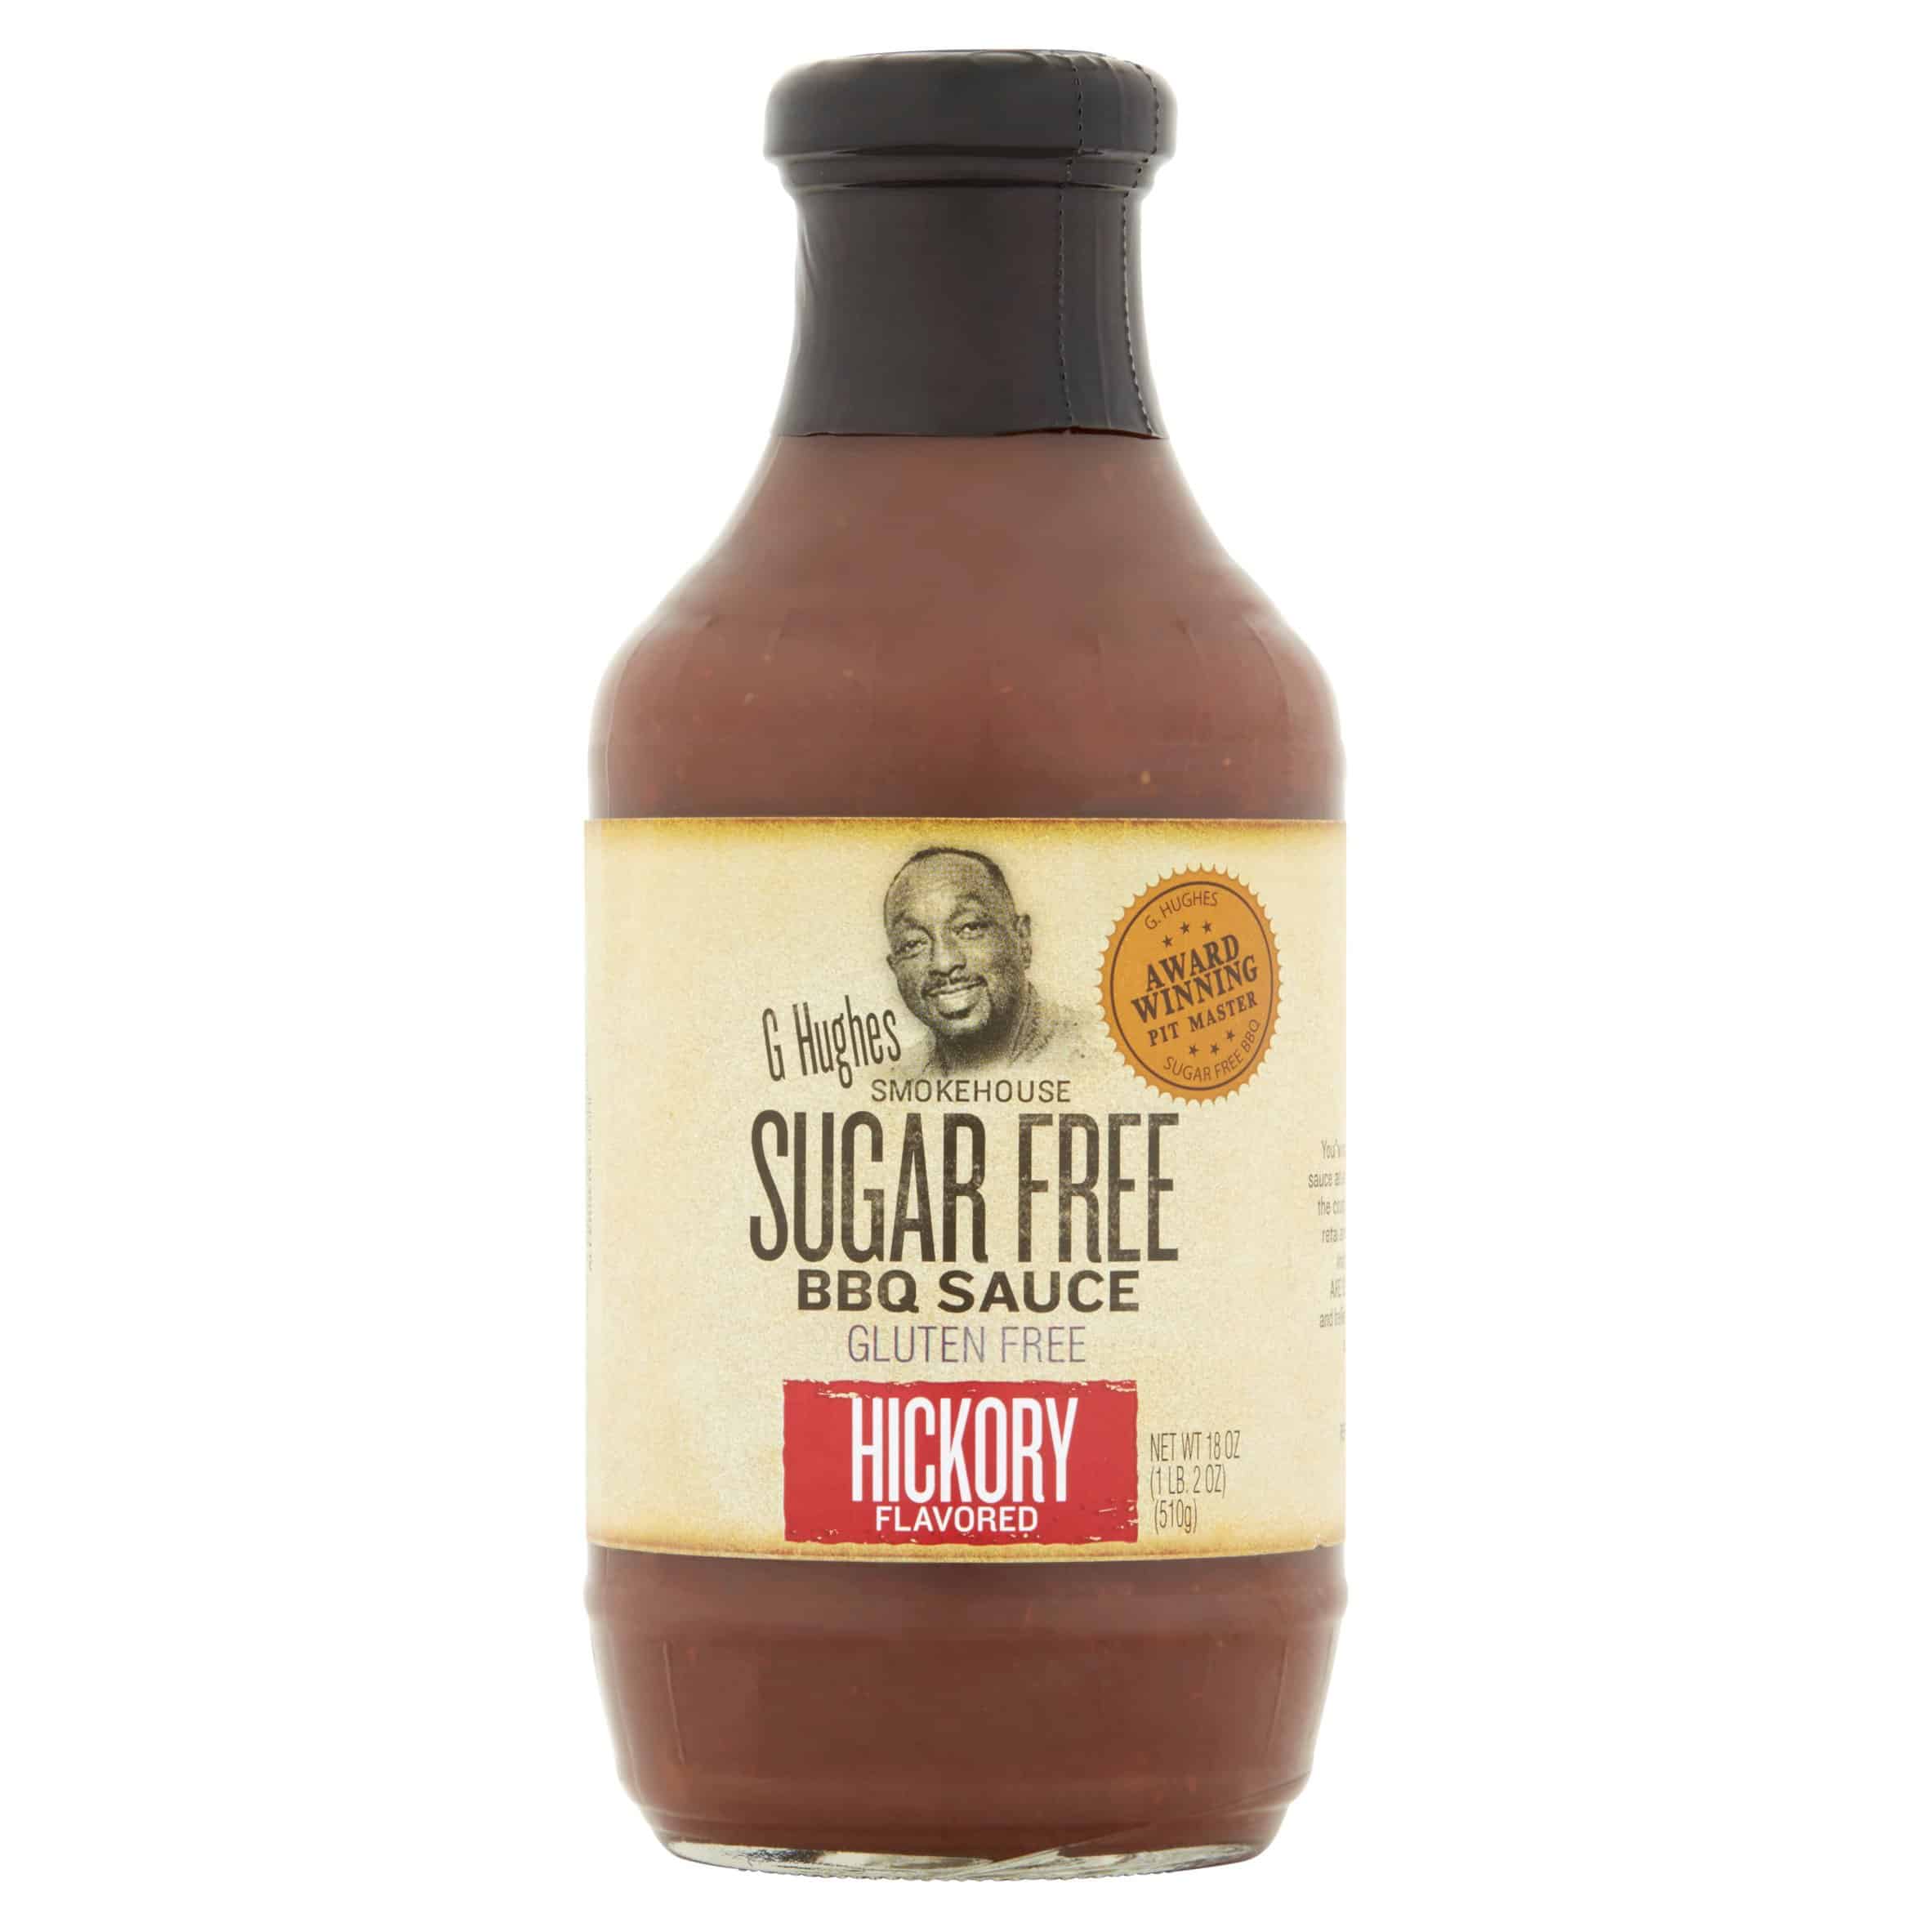 The Best G Hughes Sugar Free Bbq Sauce